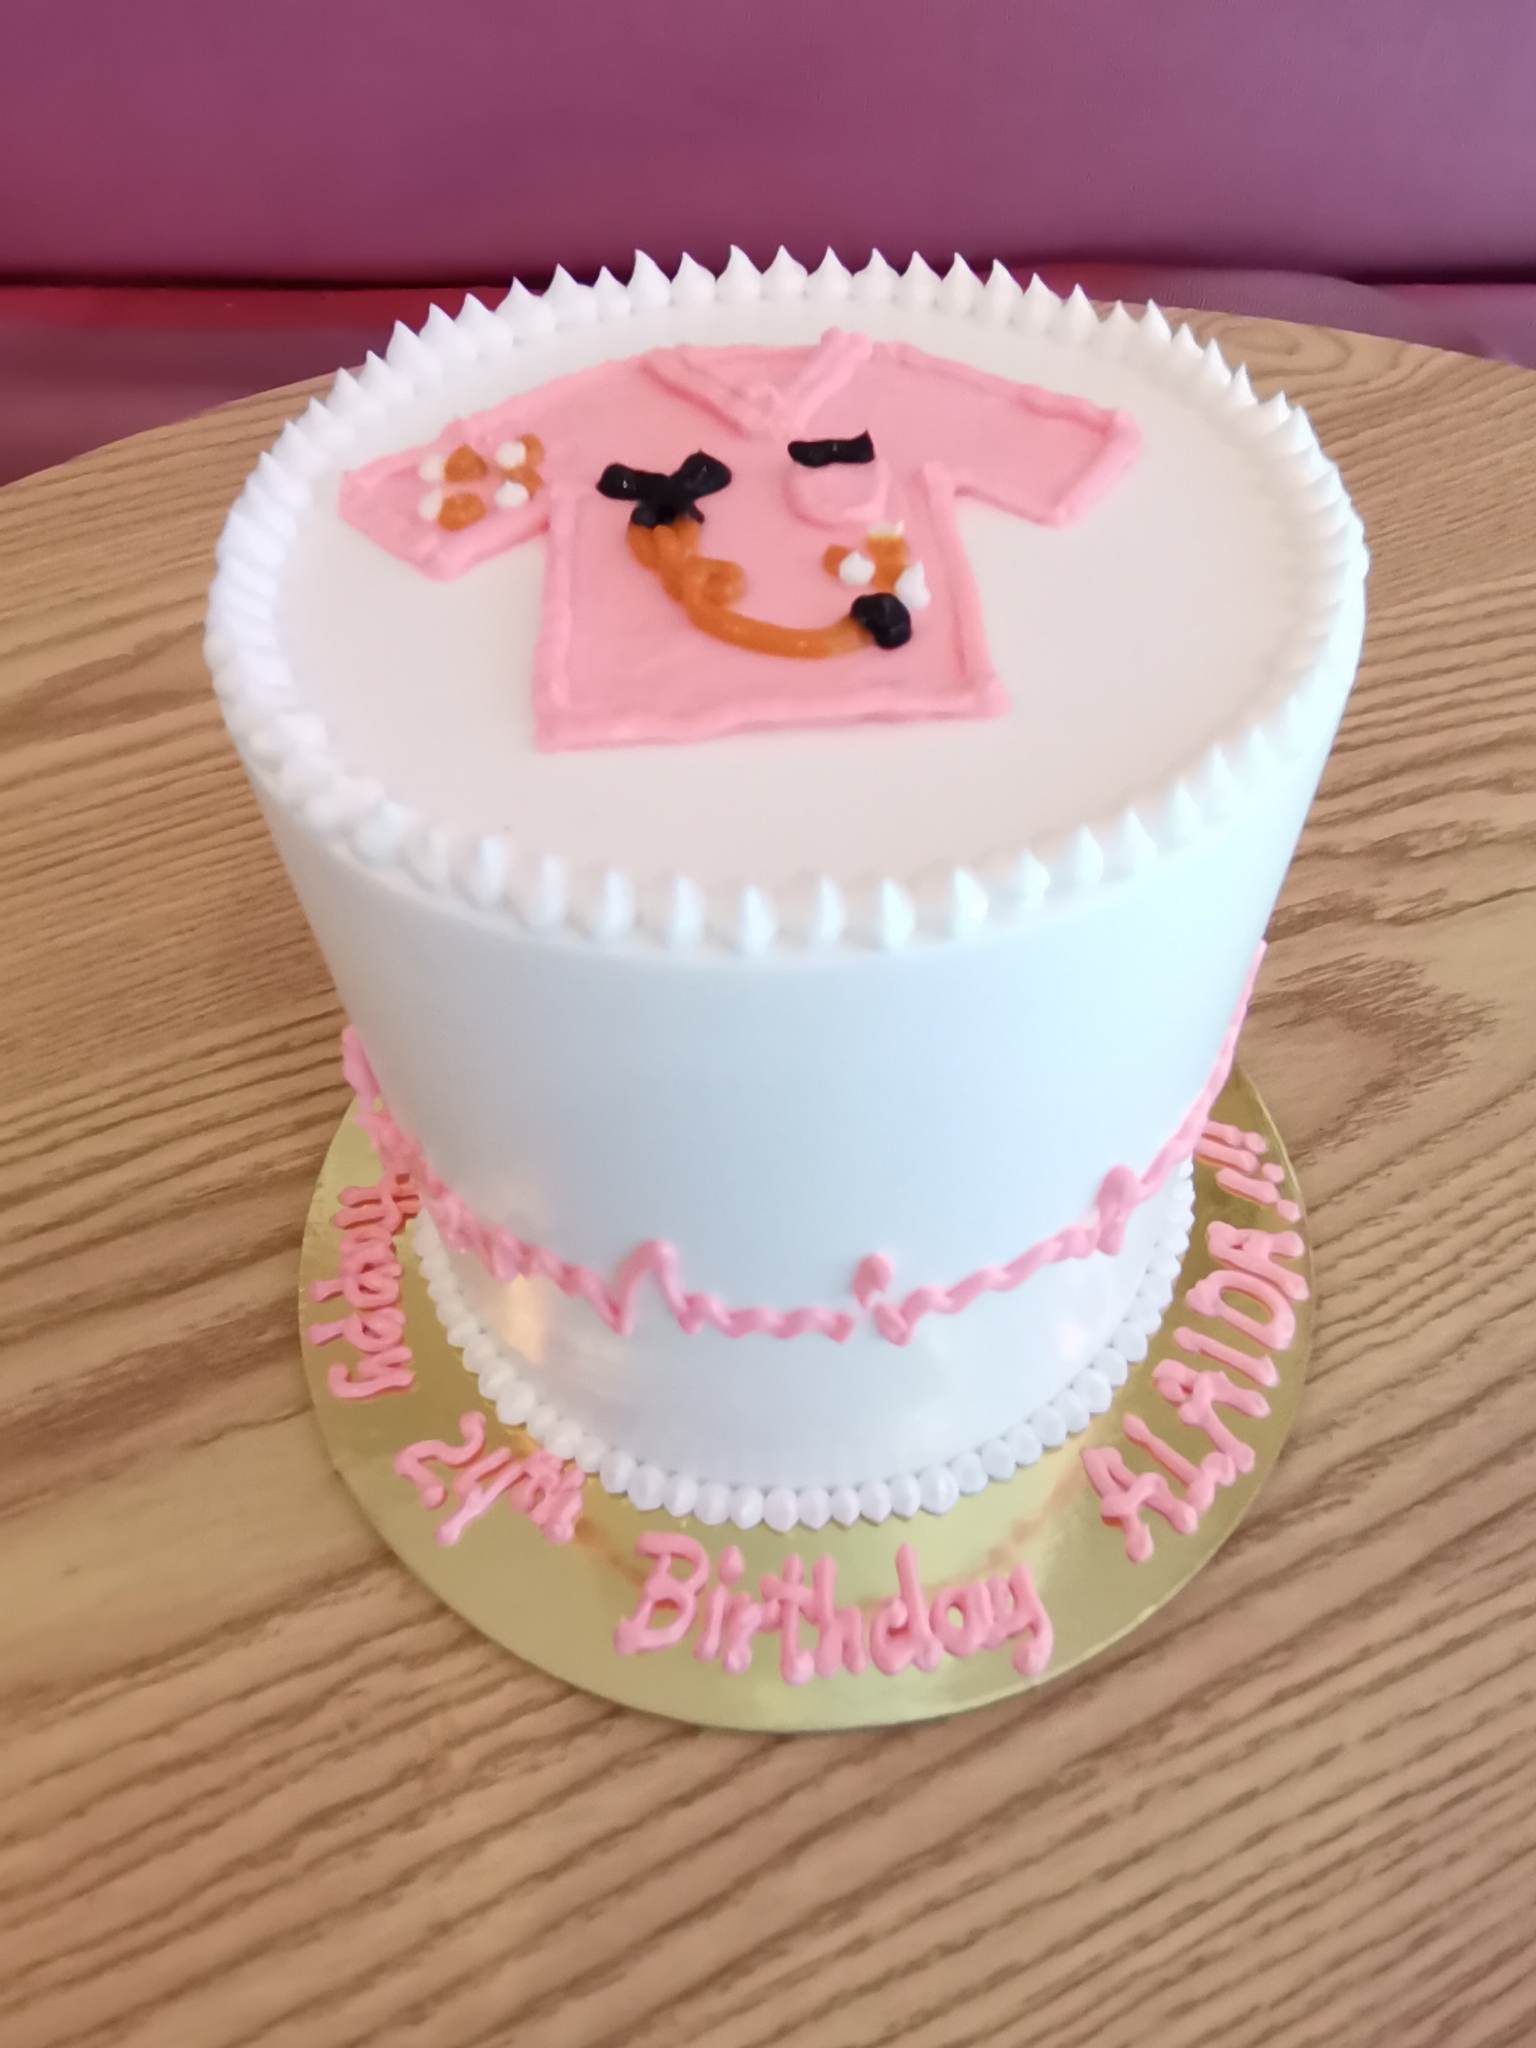 Asha's Cakes & More - 24th birthday cake❤eggless ❤ | Facebook